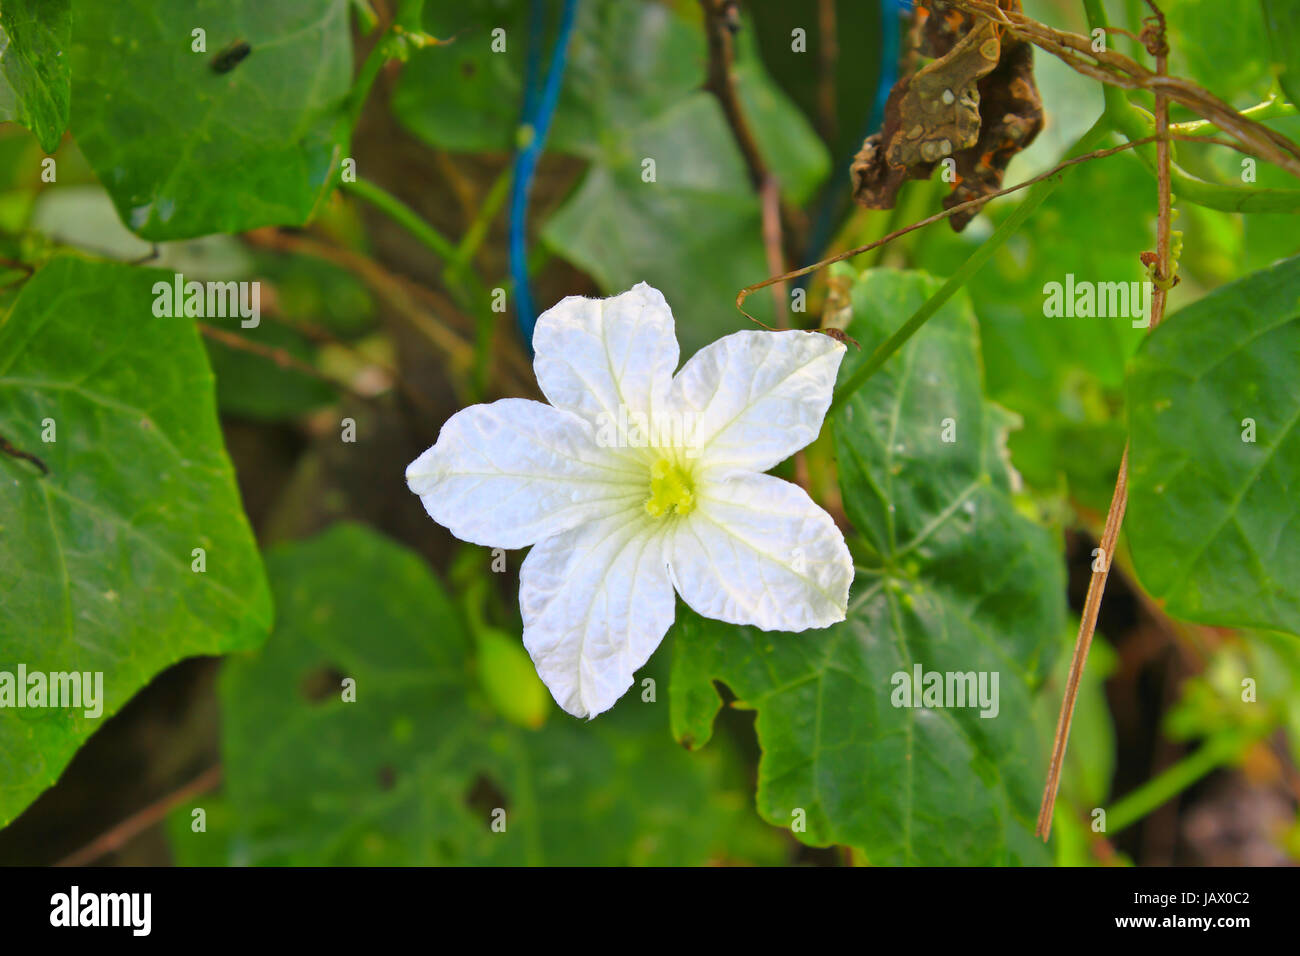 Ivy Gourd flower with green background in garden Stock Photo